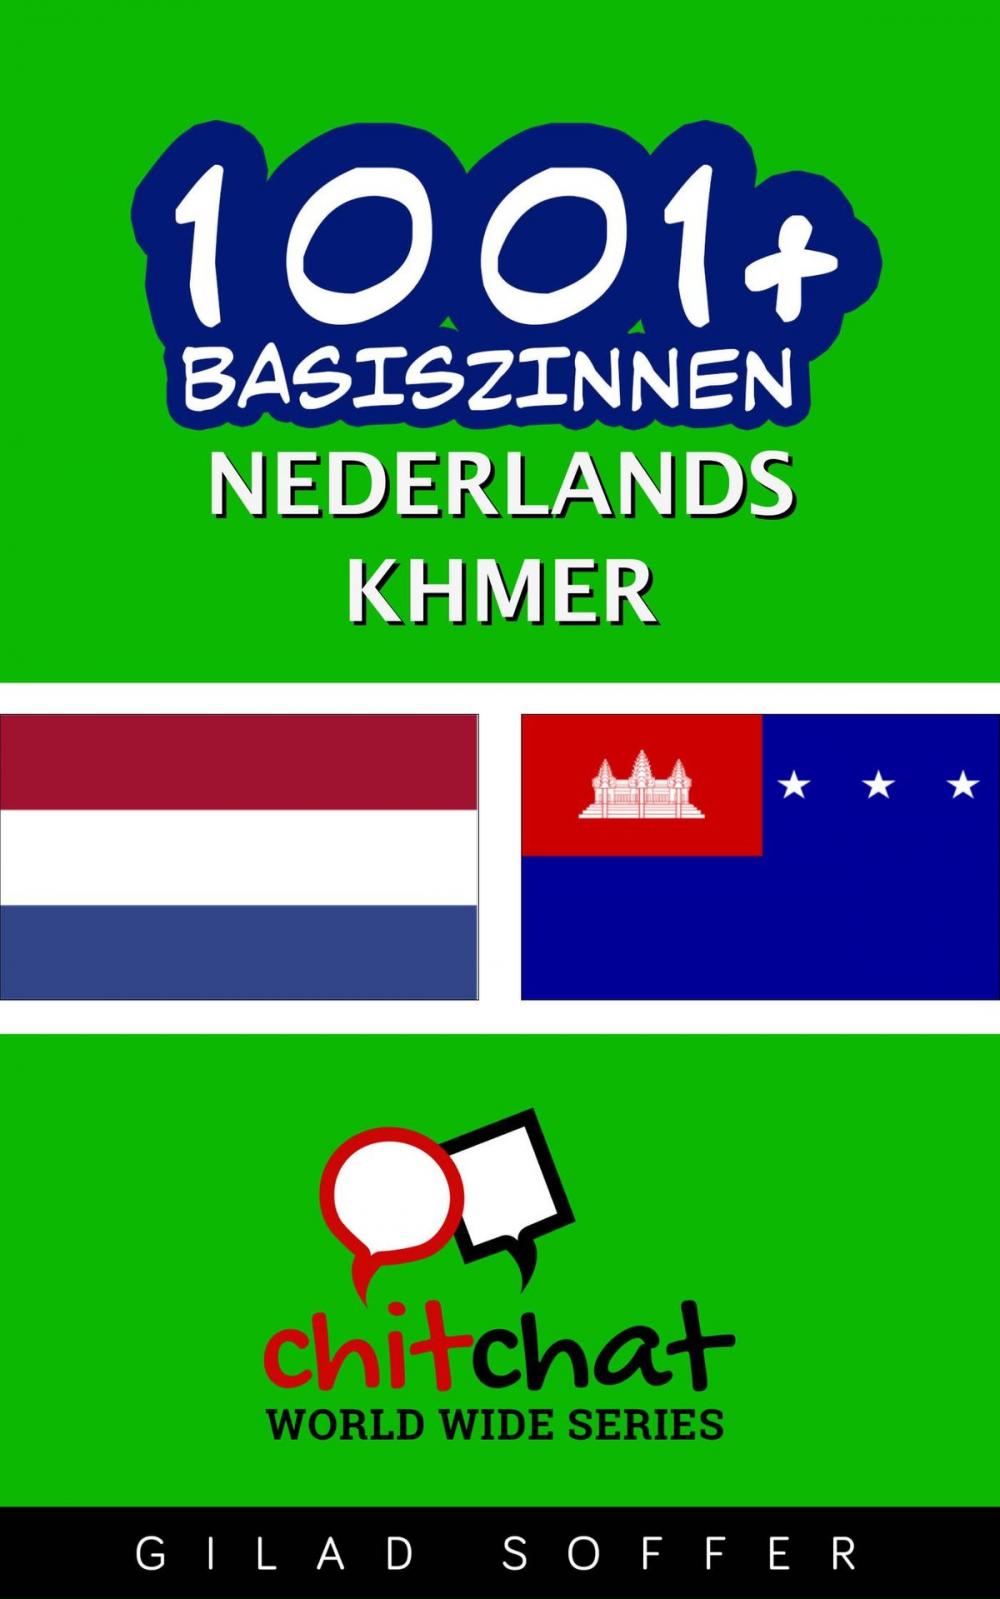 Big bigCover of 1001+ basiszinnen nederlands - Khmer